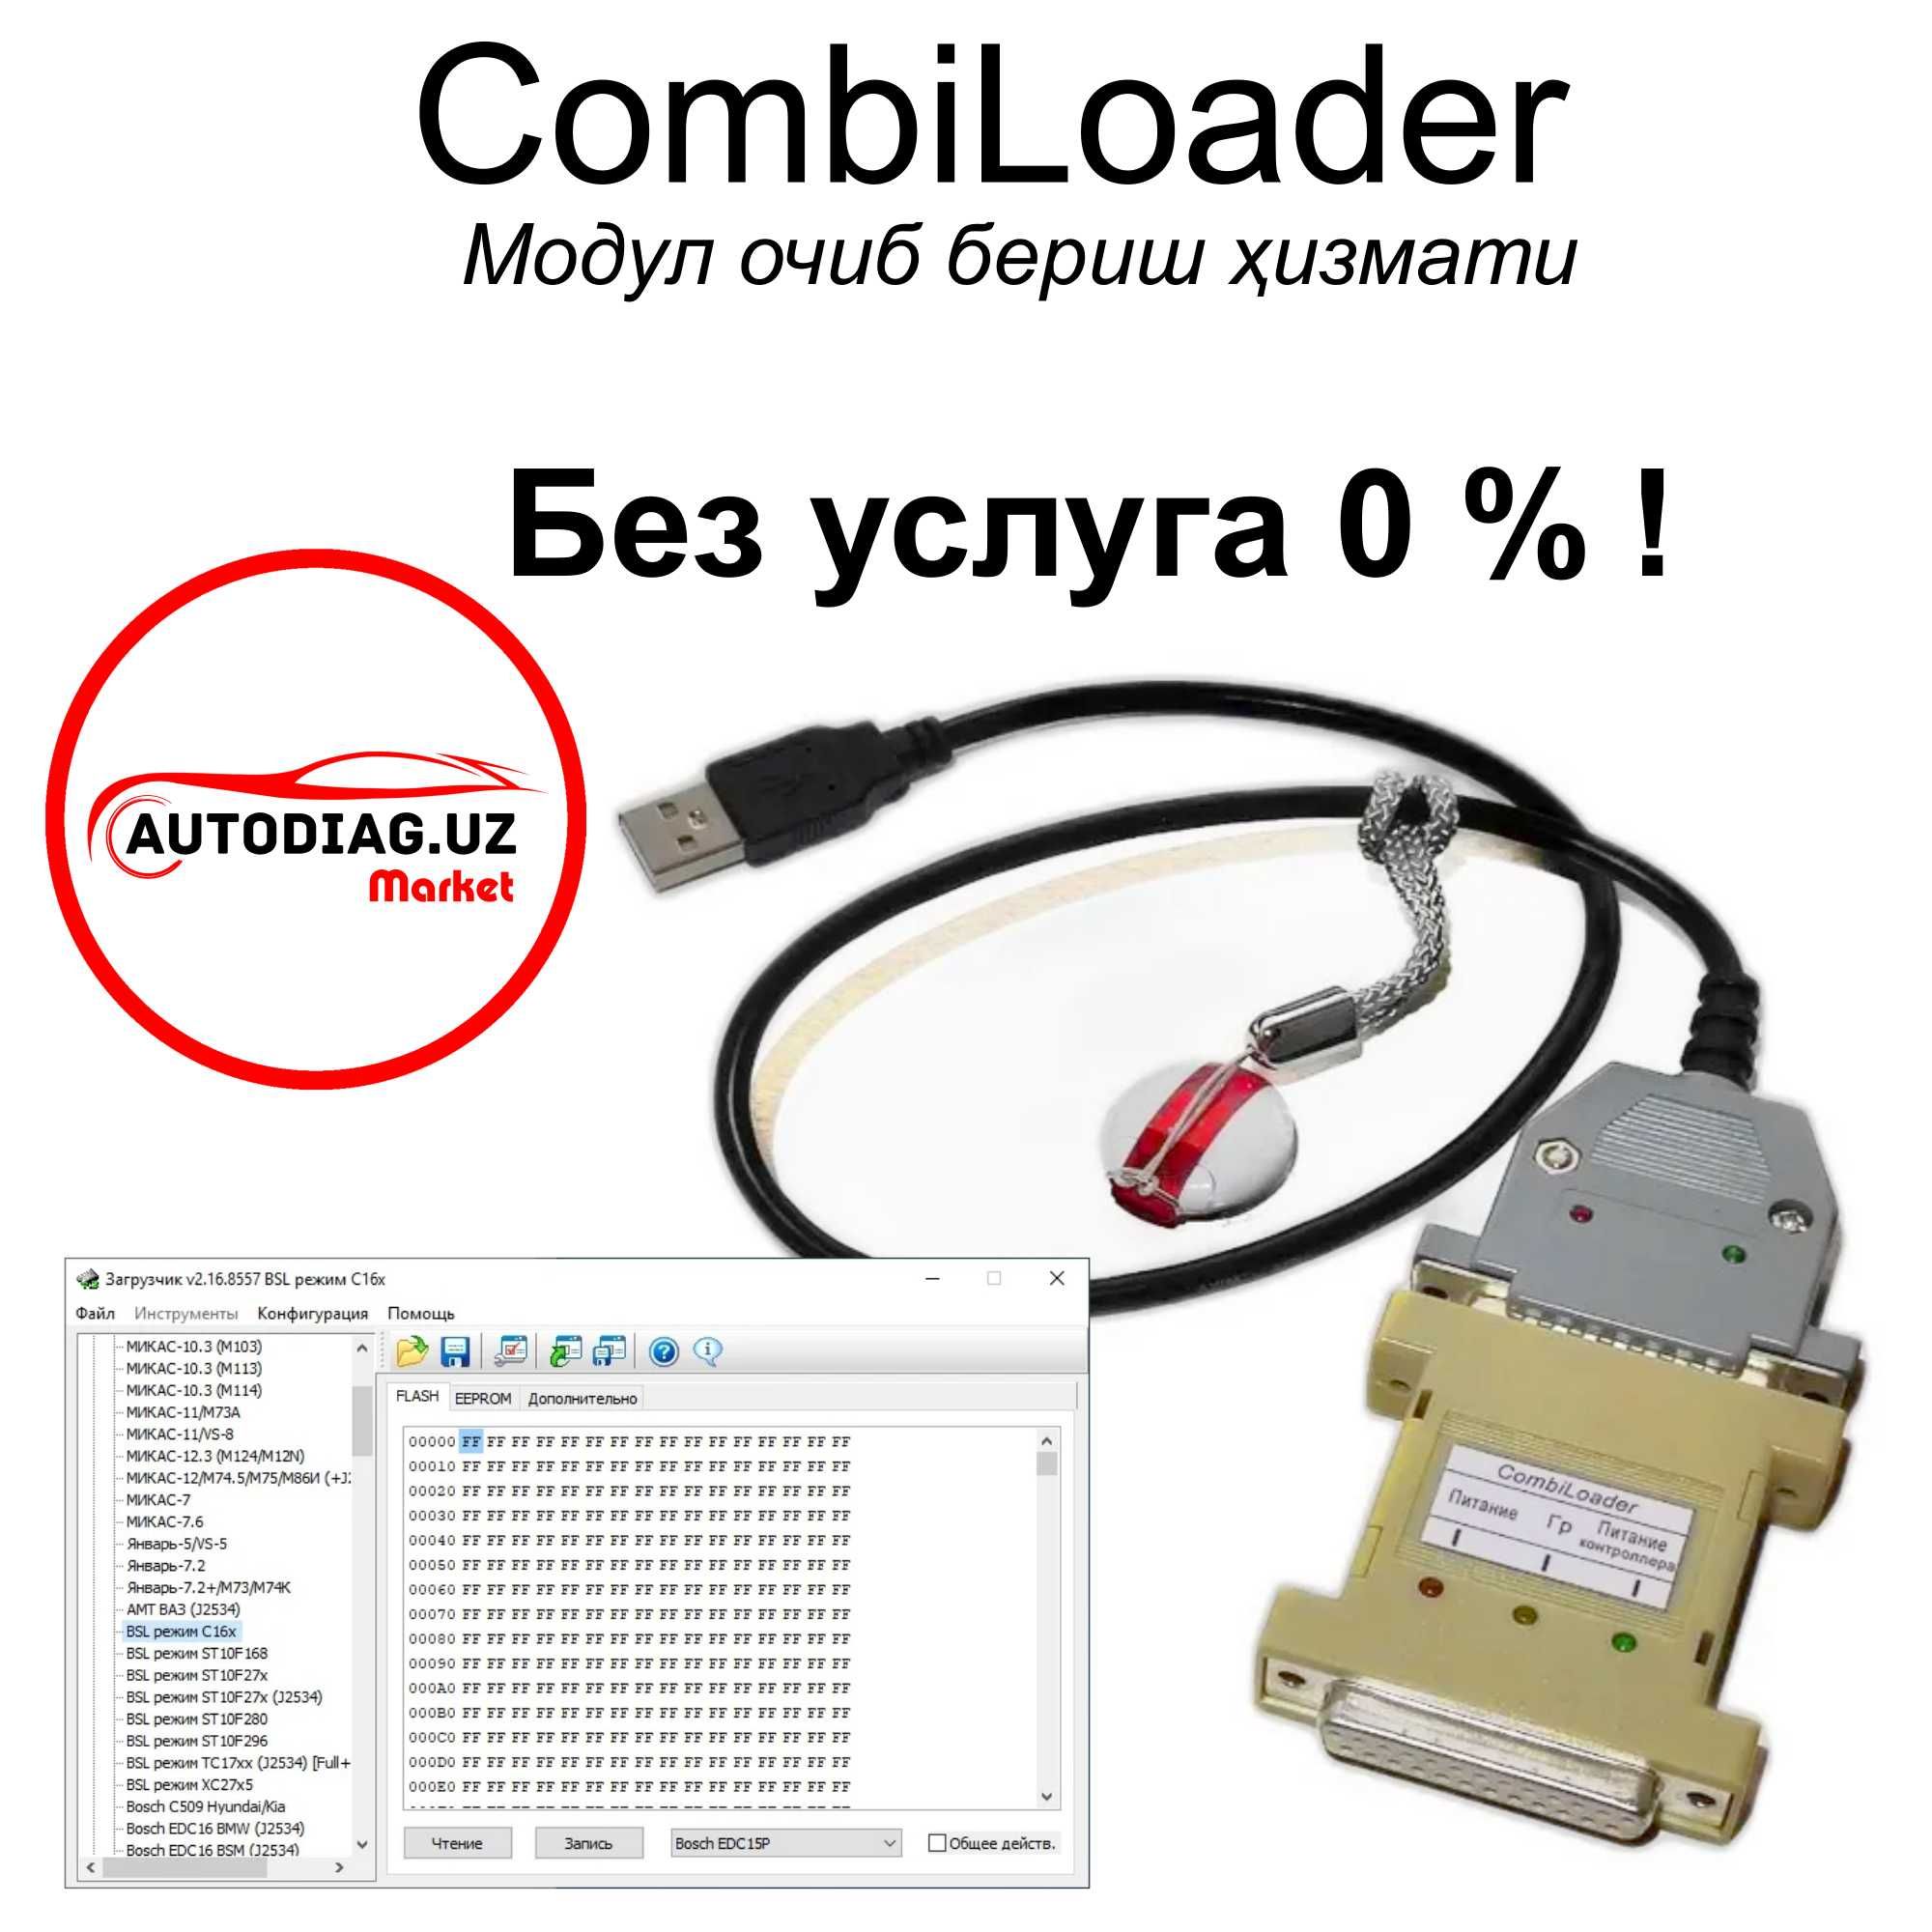 CombiLoader модуль